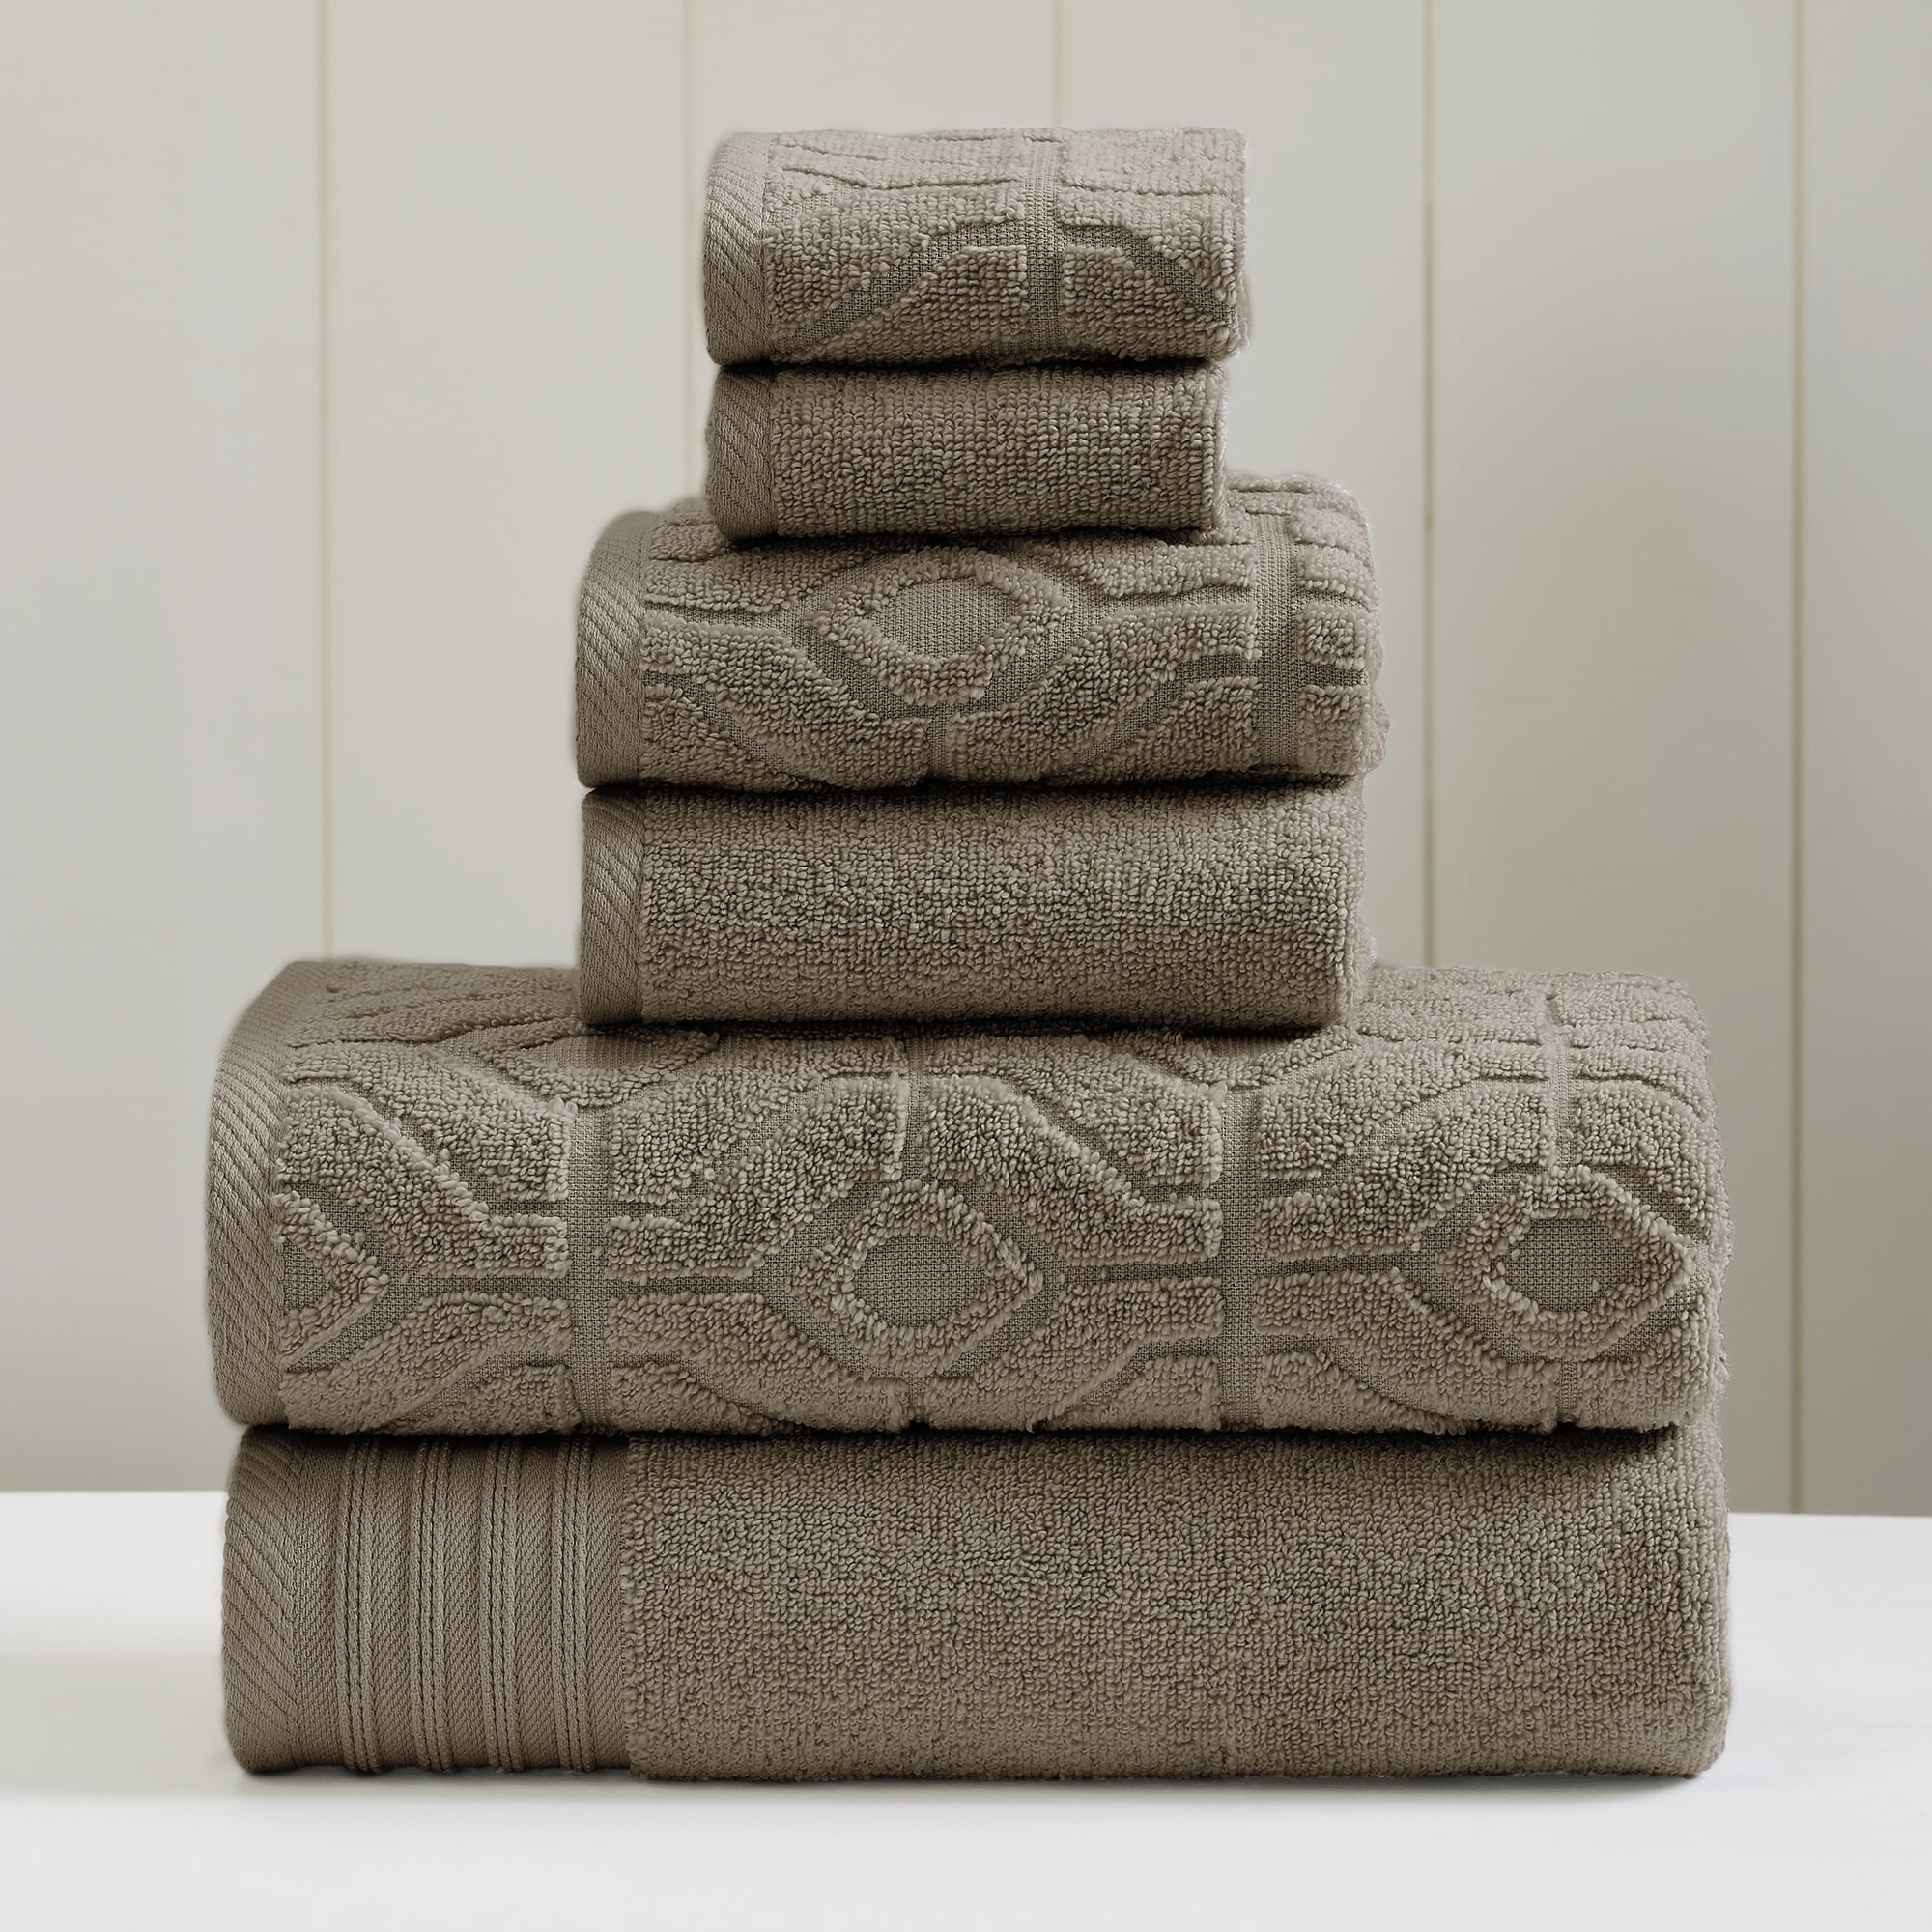 Luxury 6pc Grey White /& Aqua Geometric Cotton Jacquard Bath Towel Set